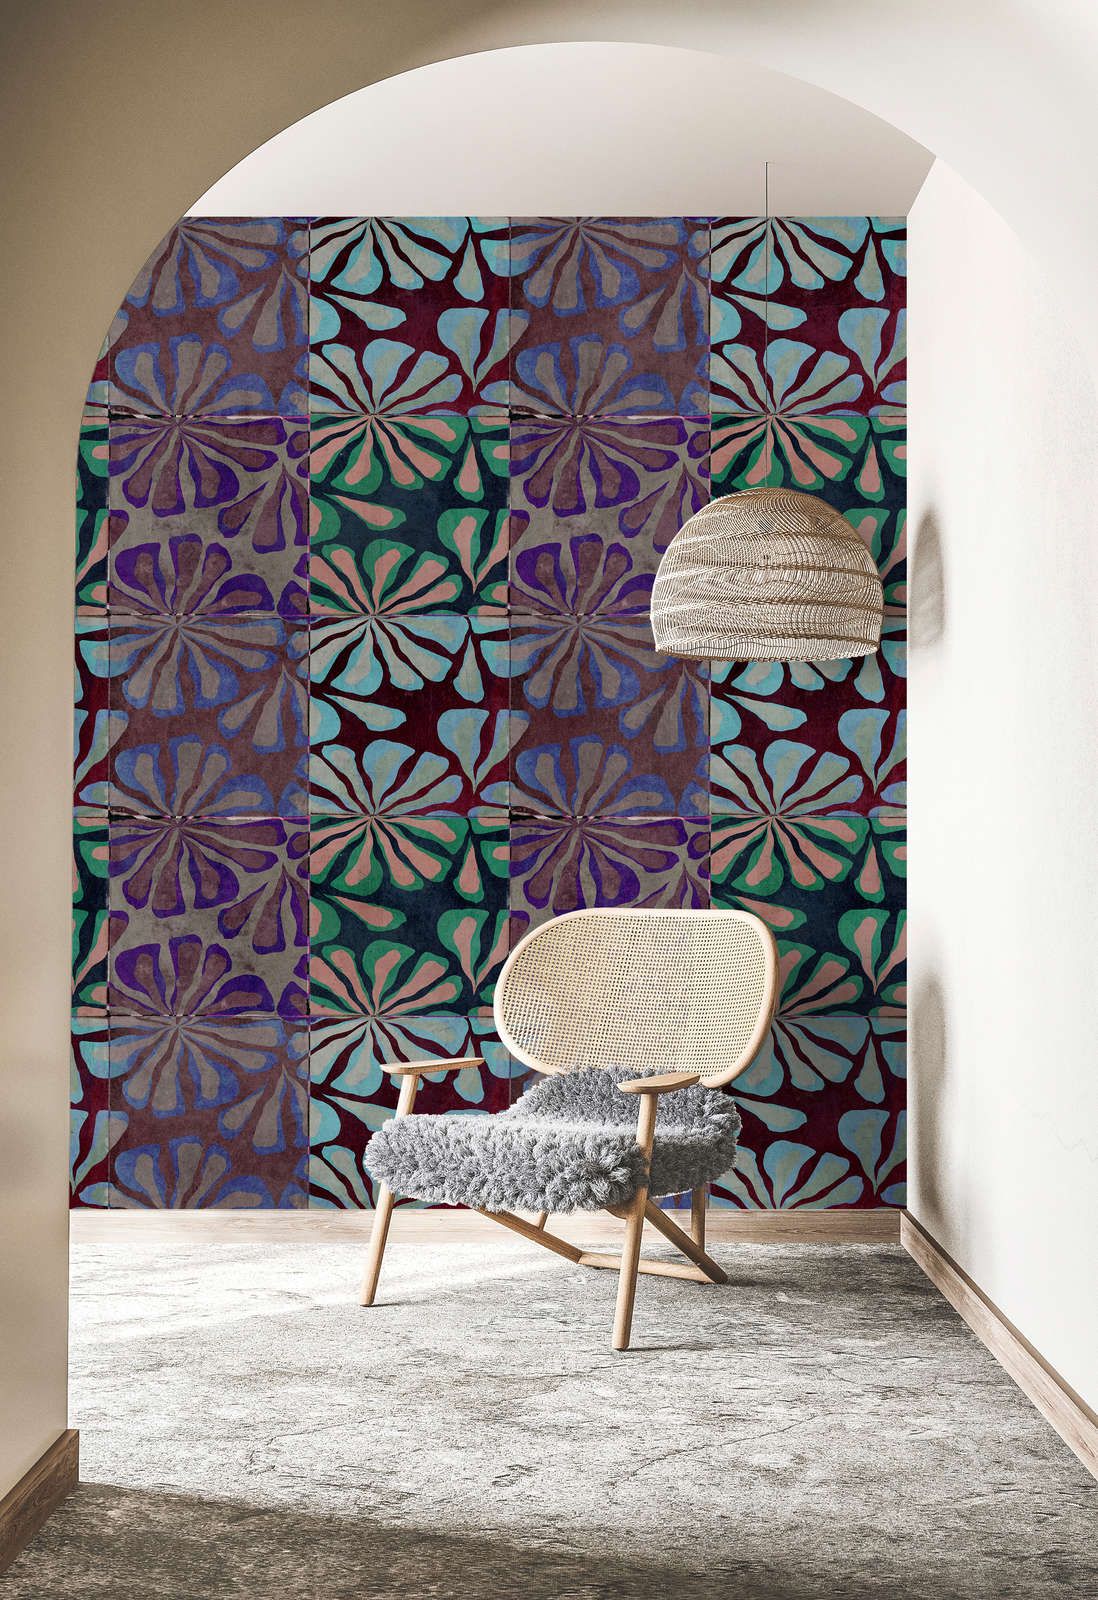             Photo wallpaper »nevio« - Colourful patchwork design in front of concrete plaster look - Matt, smooth non-woven fabric
        